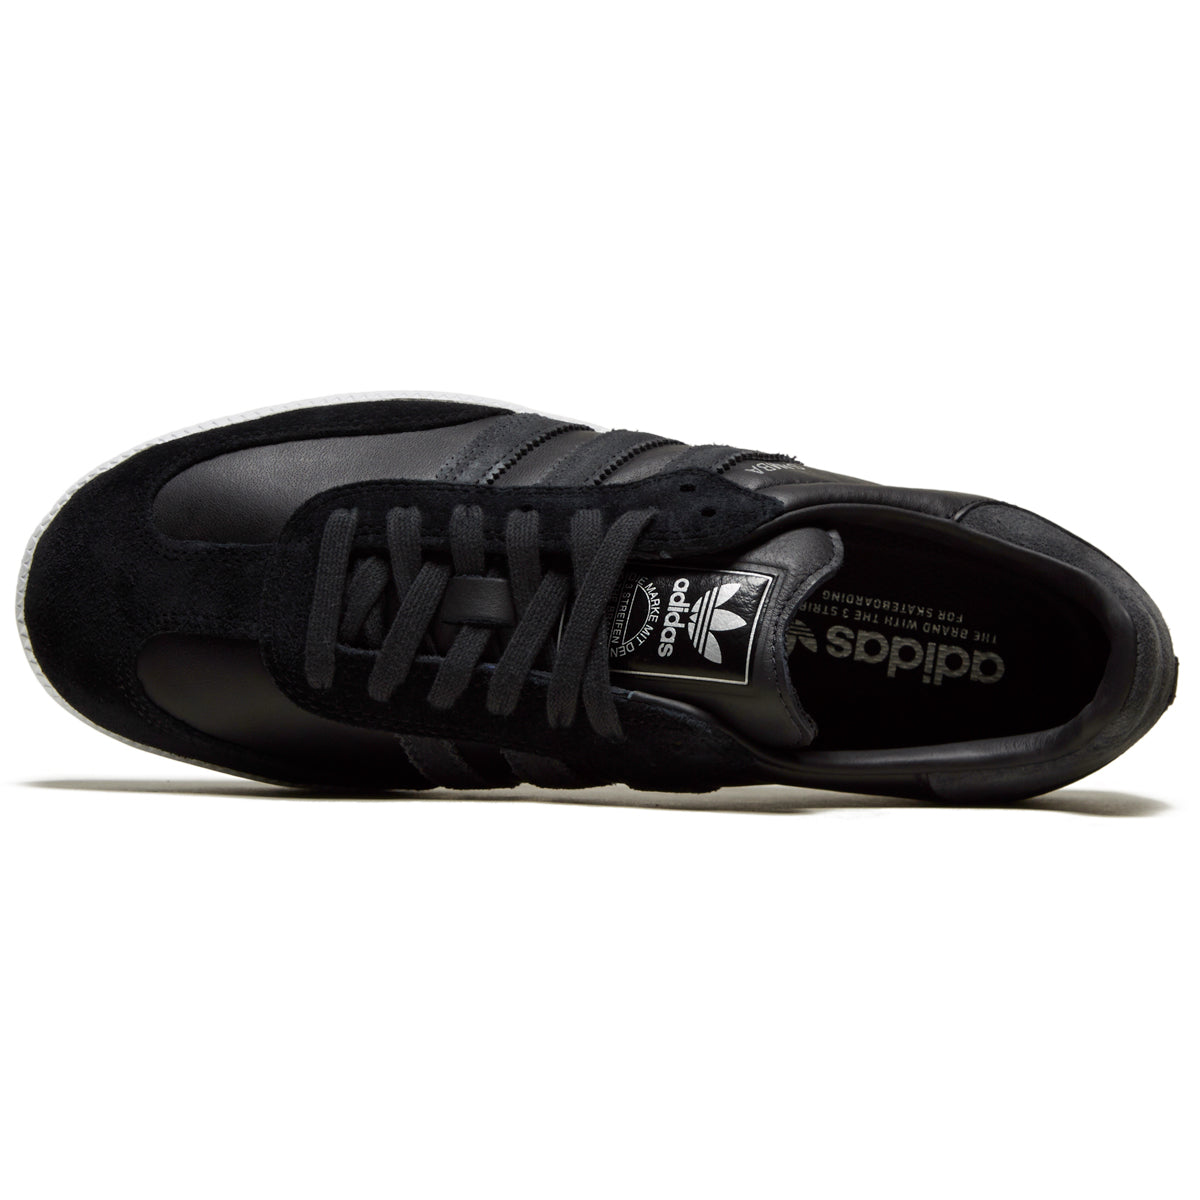 Adidas Samba ADV Shoes - Core Black/Carbon/Silver Metallic image 3